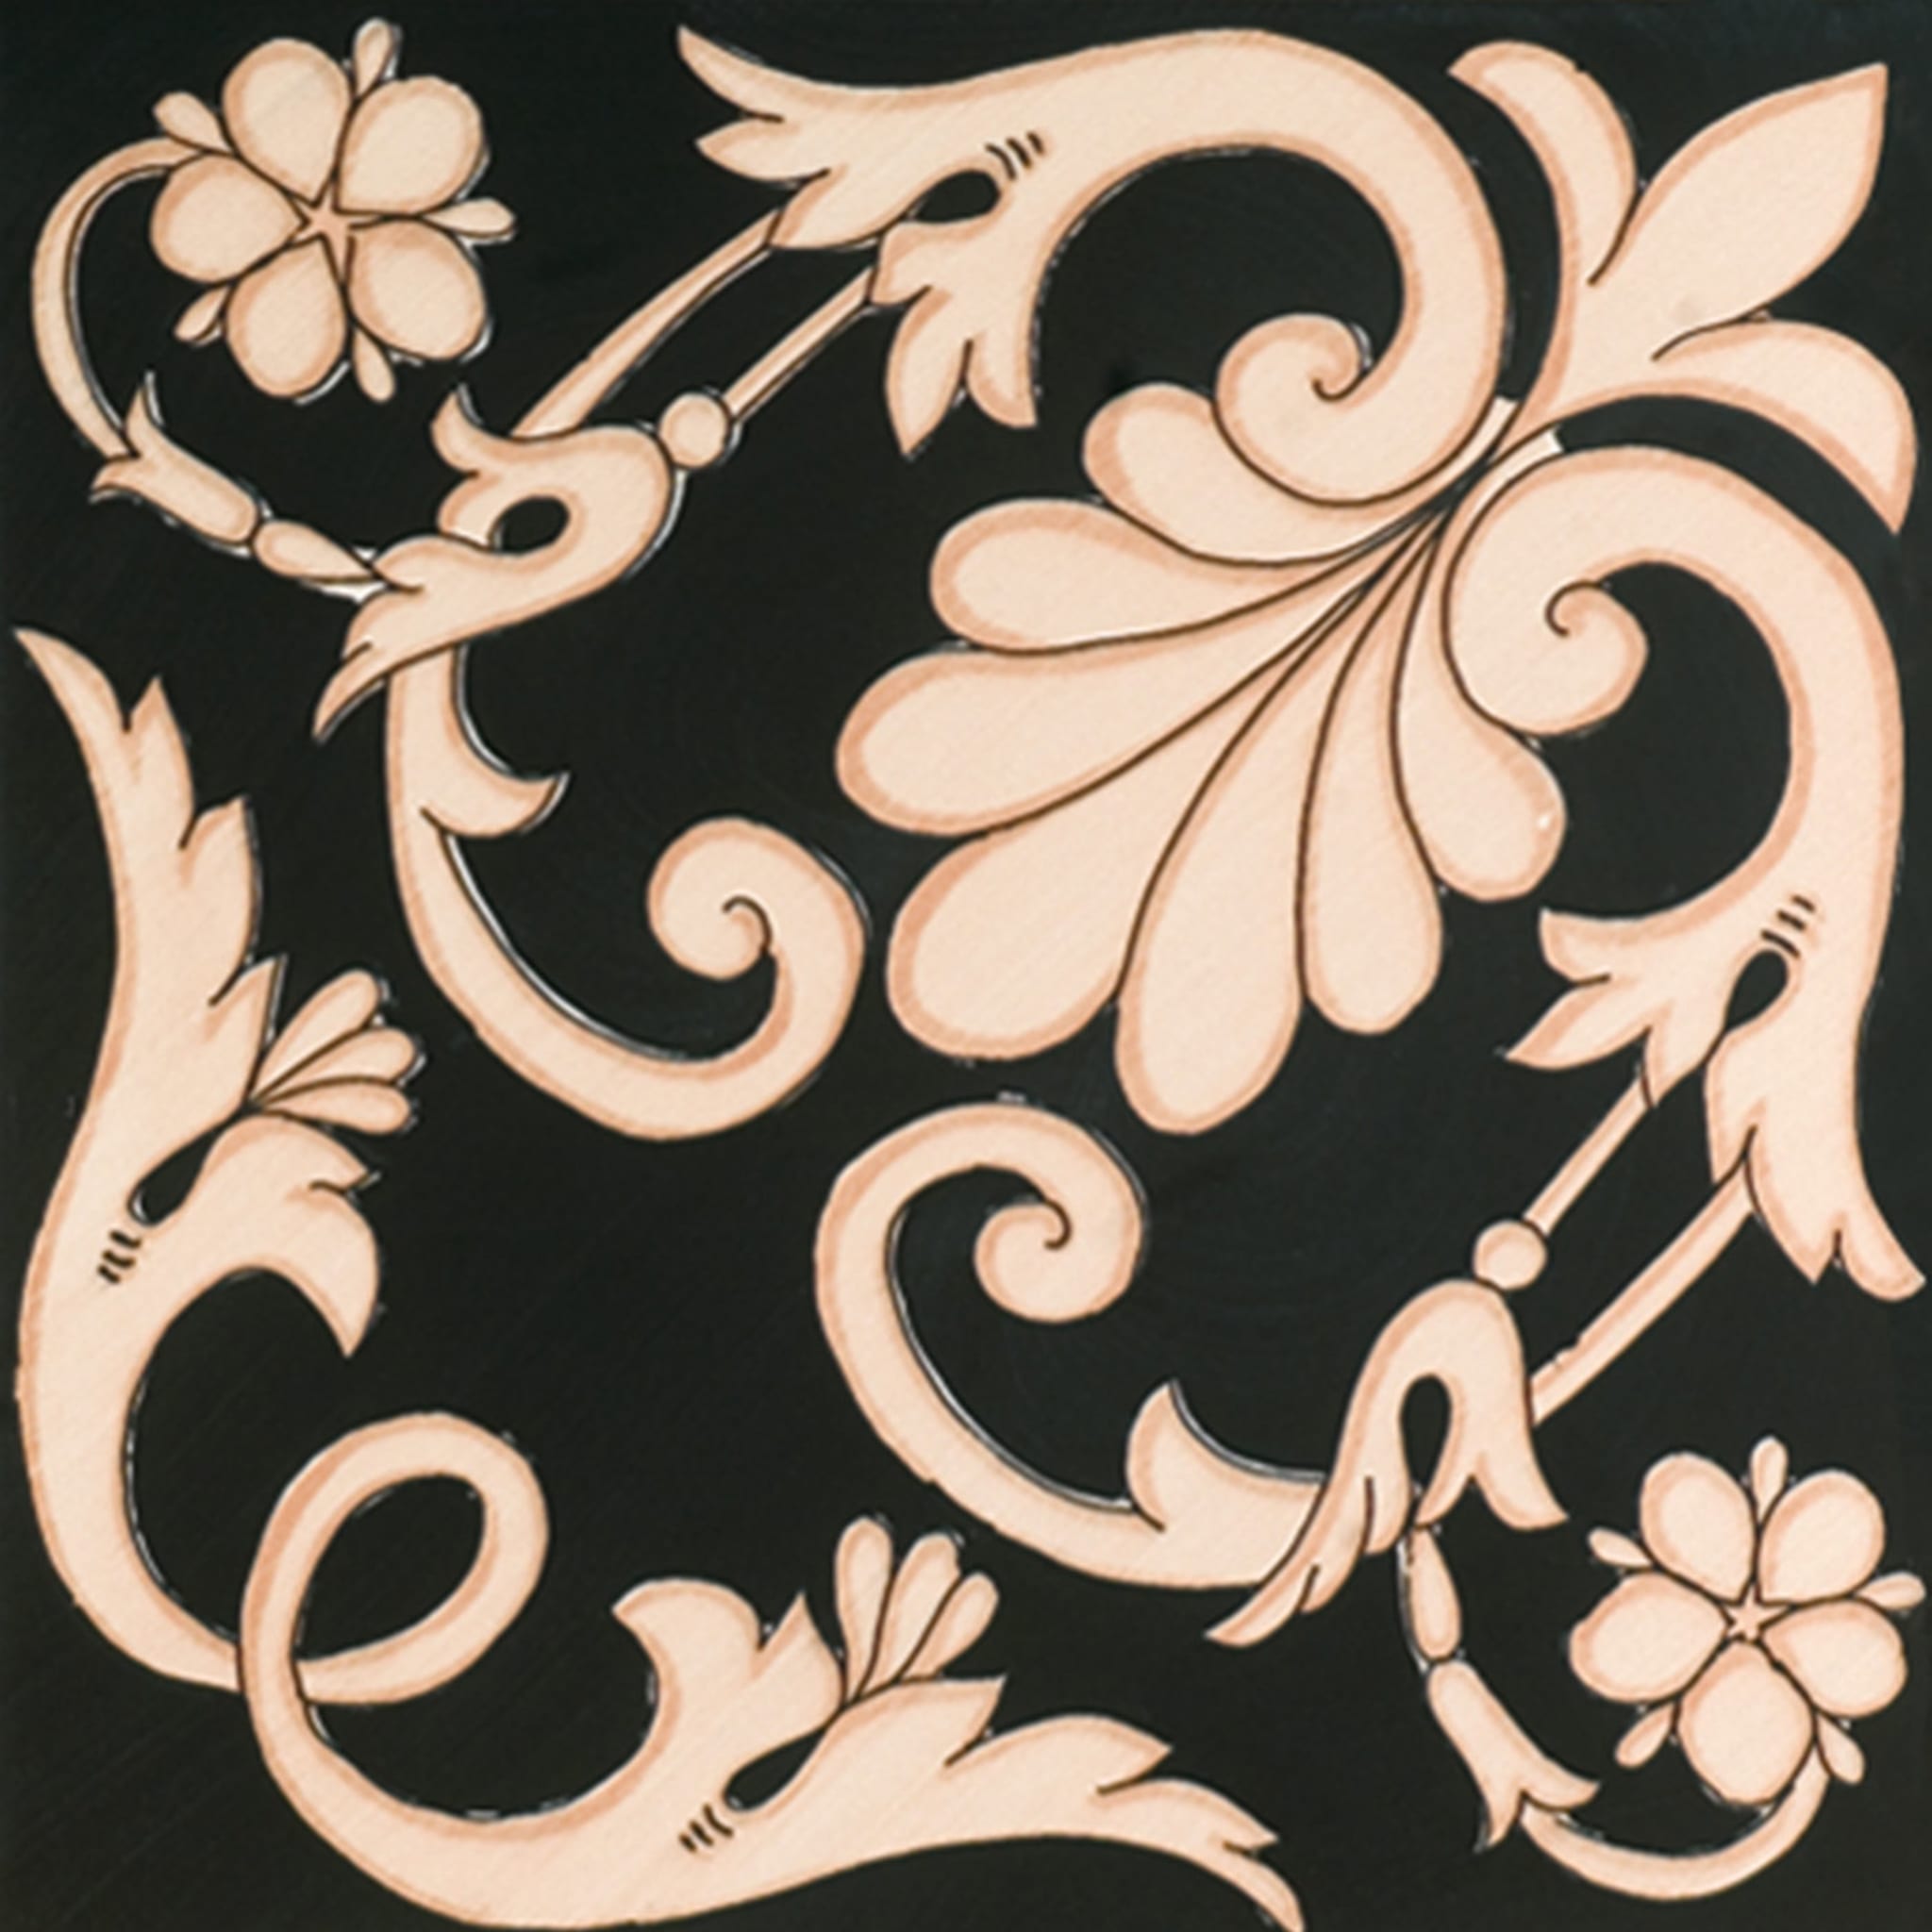 Set of 25 Ieranto Black Tiles Fiori Scuri Collection - Alternative view 1